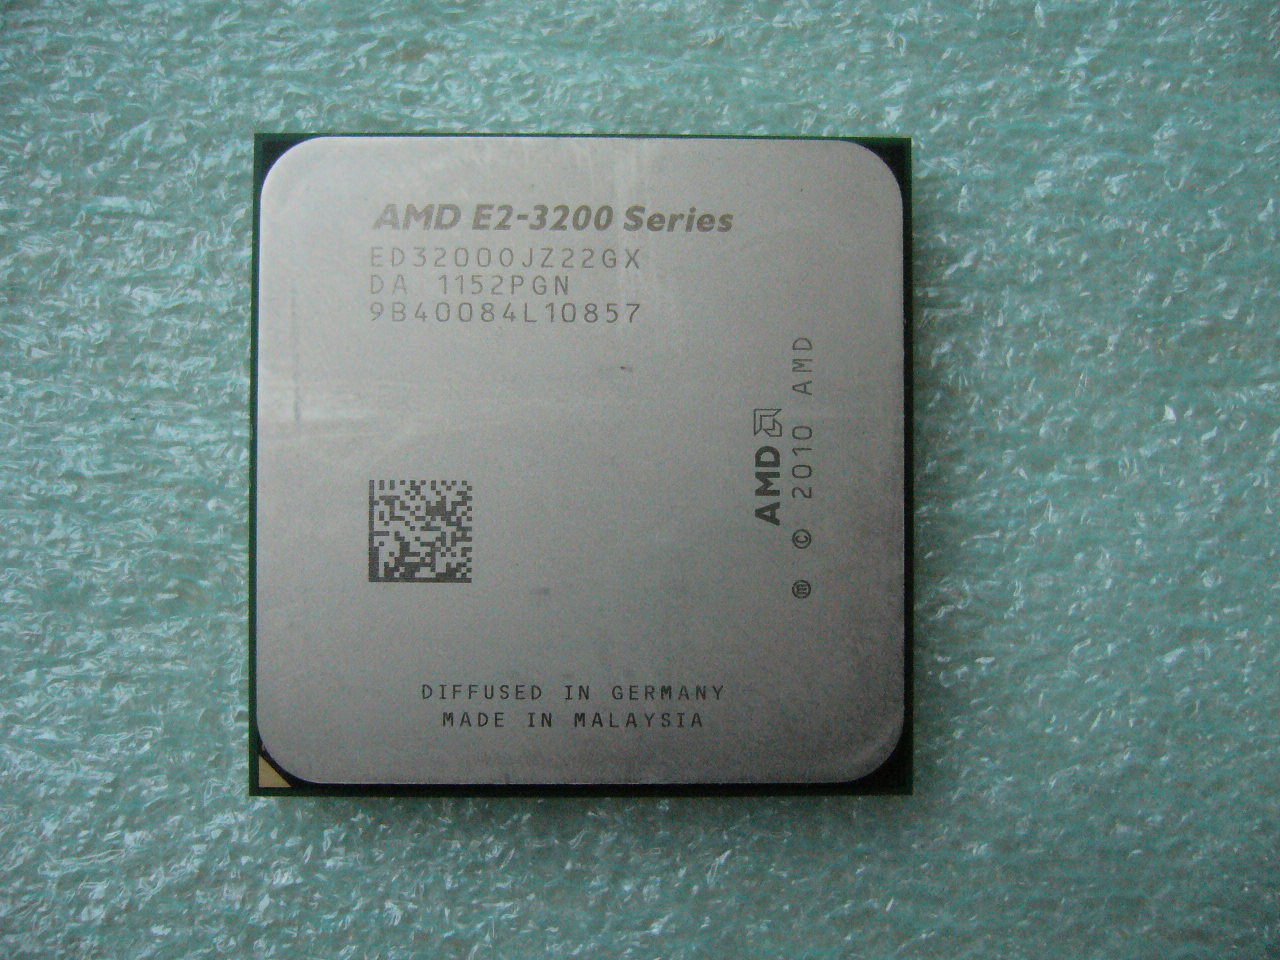 QTY 1x AMD E2-3200 2.4 GHz Dual-Core (ED32000JZ22GX) CPU Socket FM1